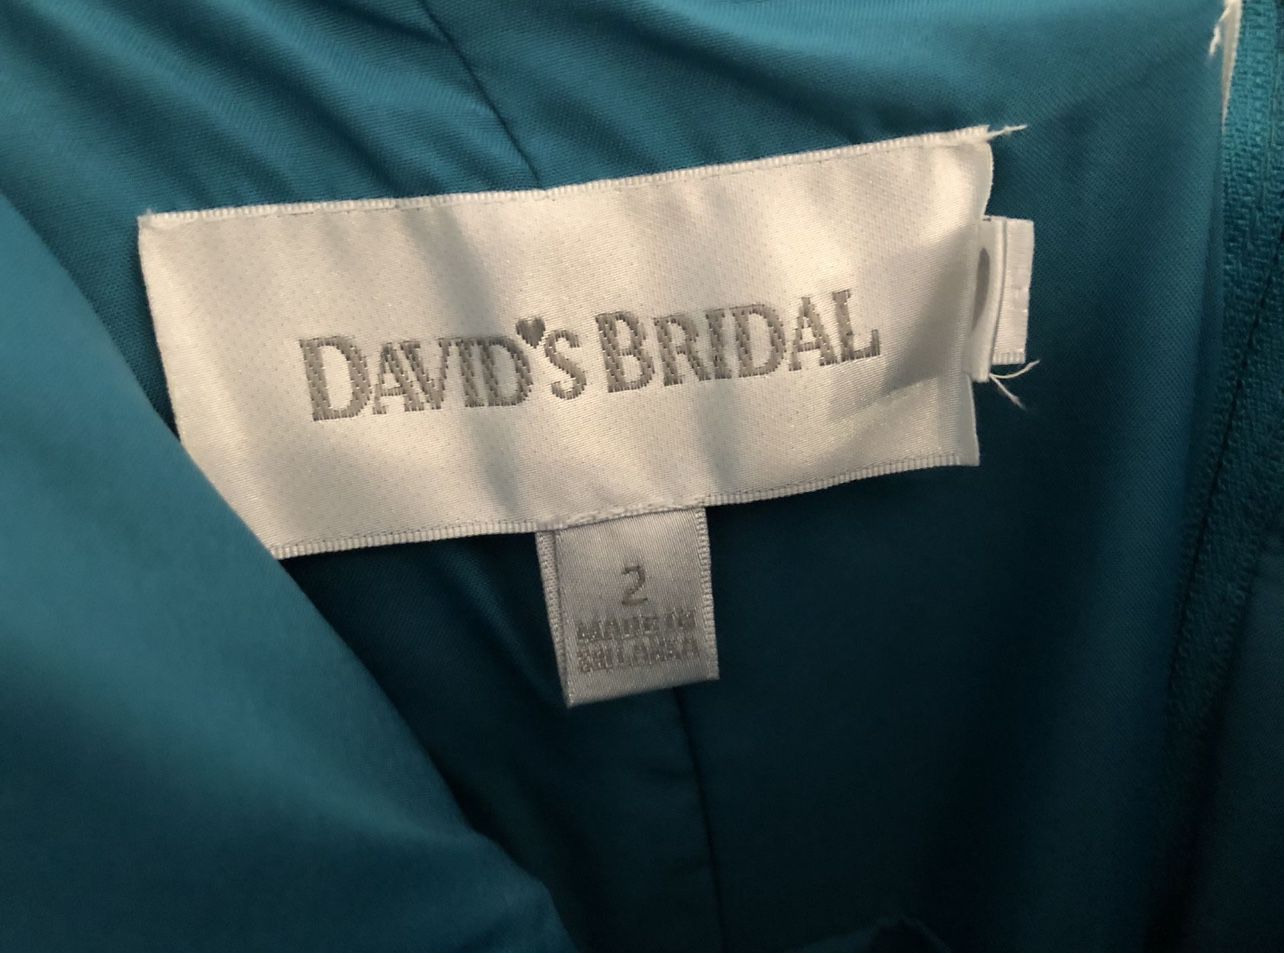 David’s Bridal Bridesmaid Strapless Wedding Dress - Teal Green - Size 2 